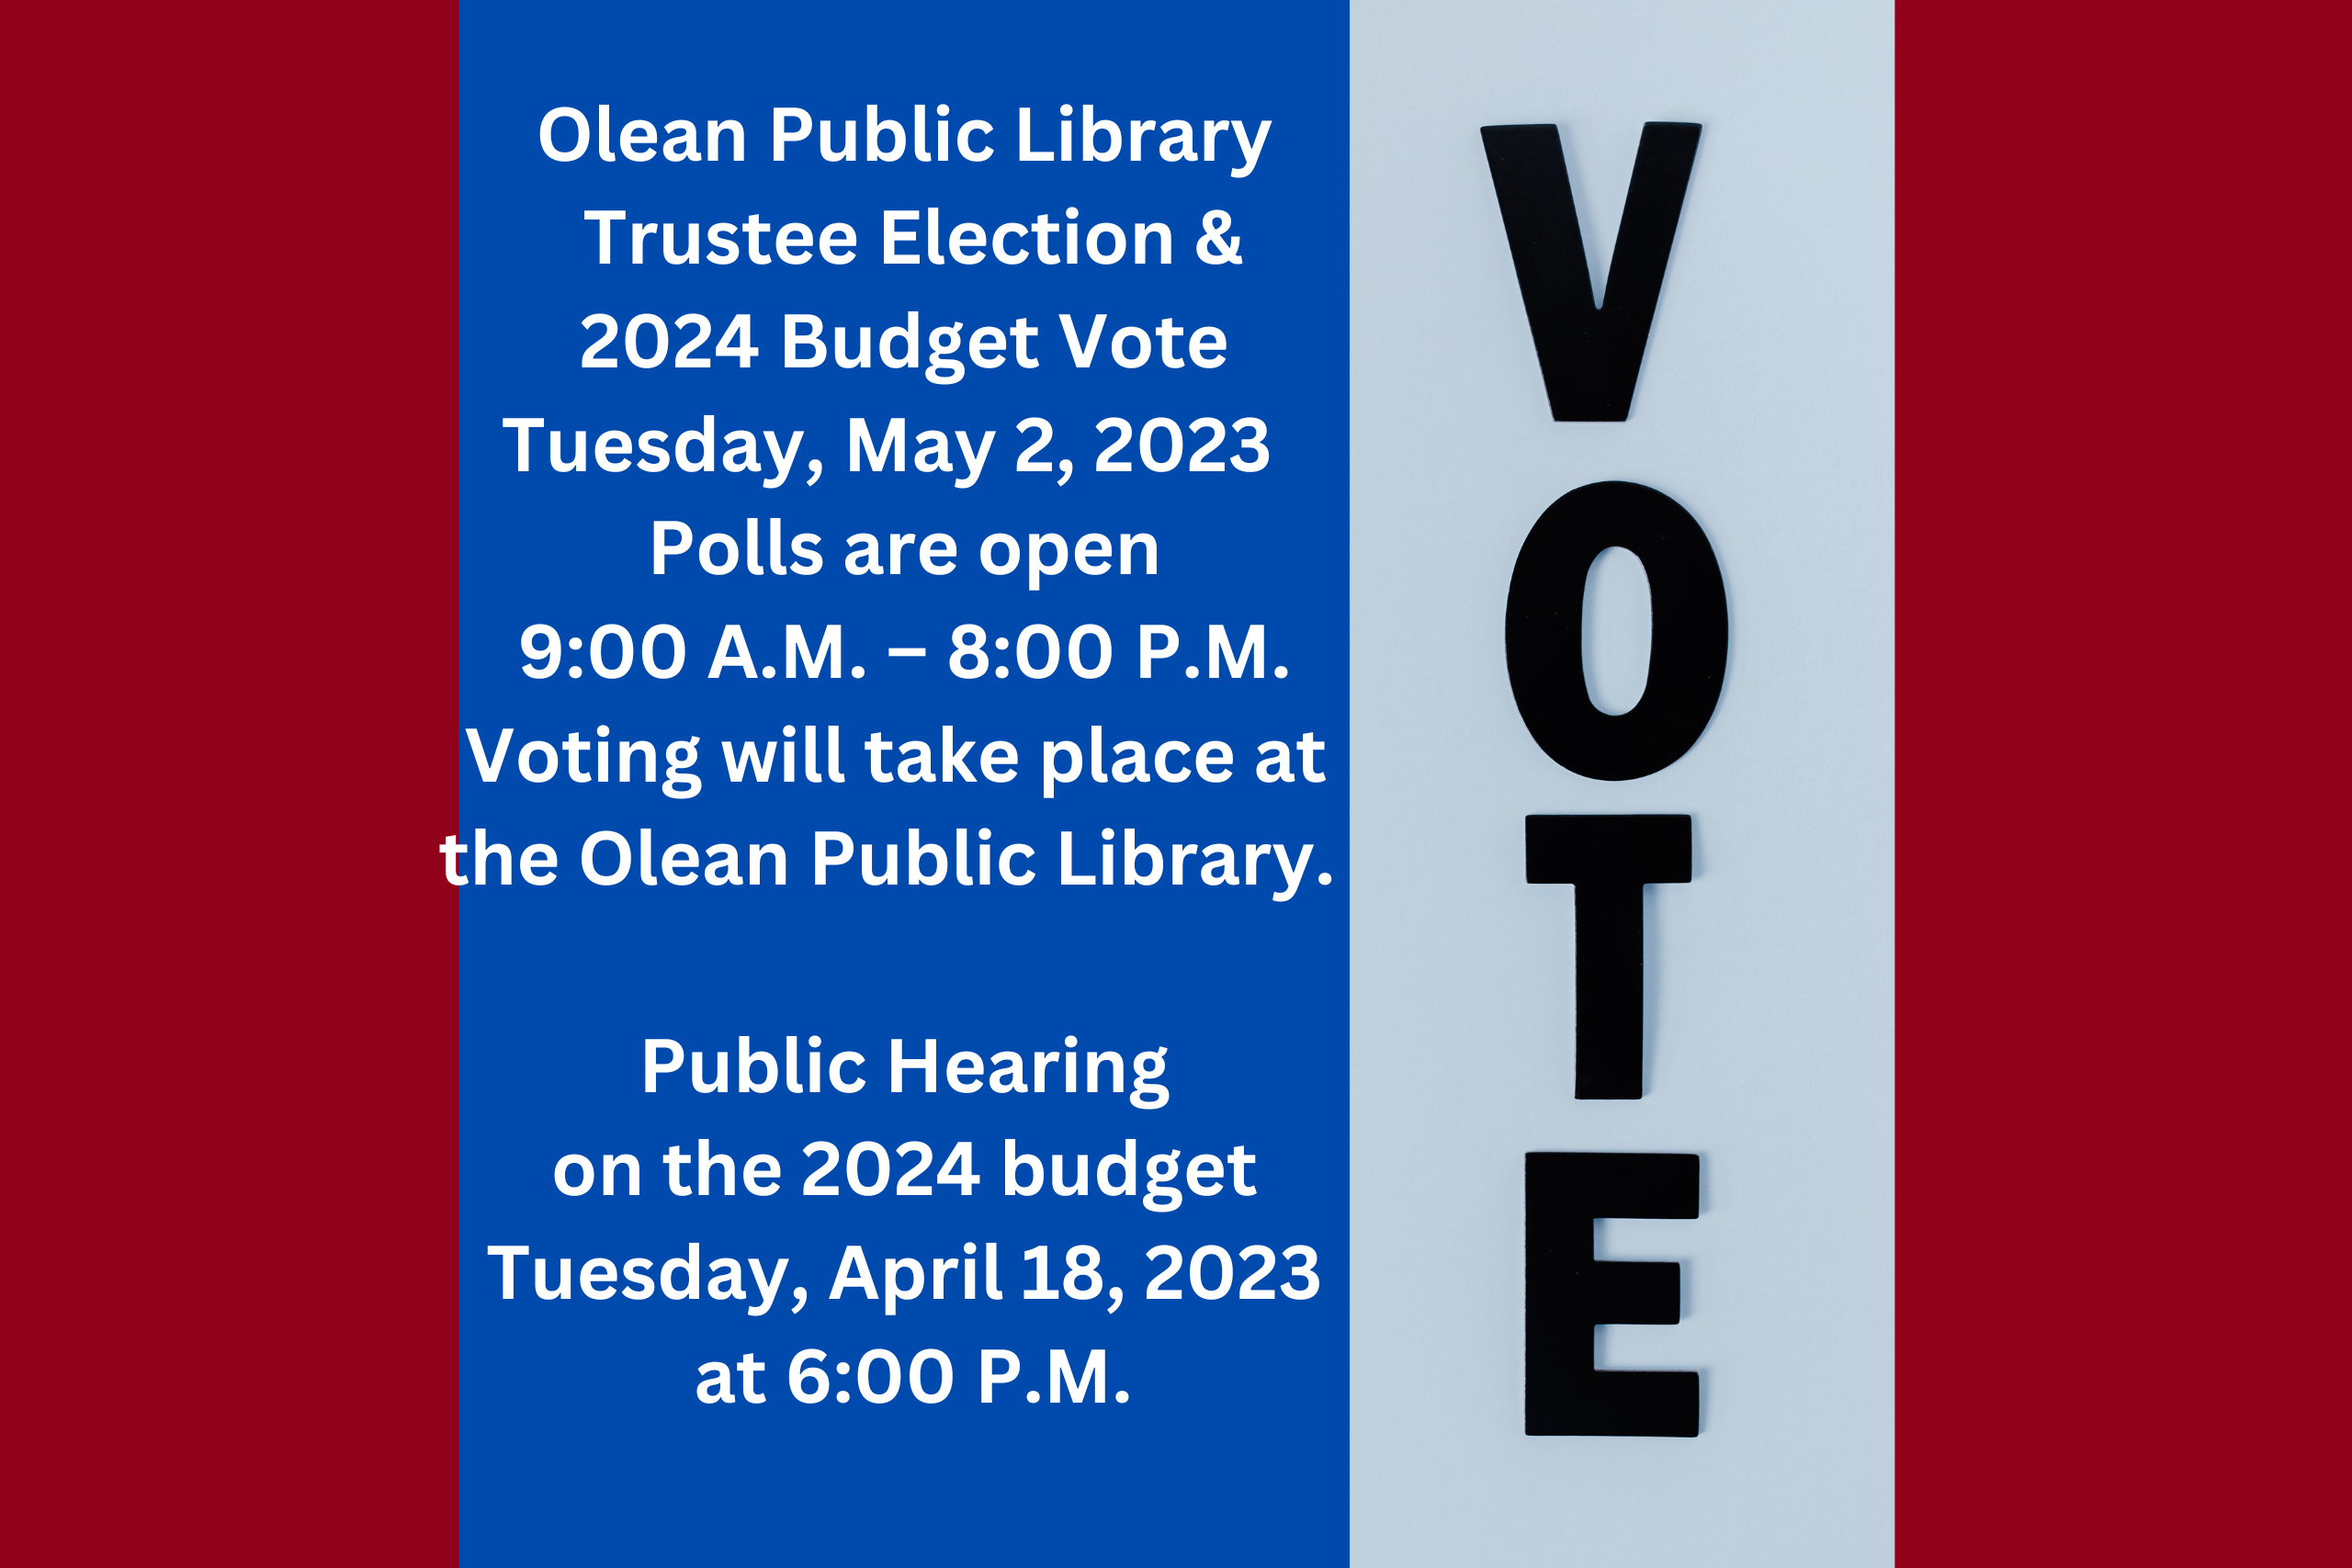 OPL Trustee Election & 2024 Budget Vote